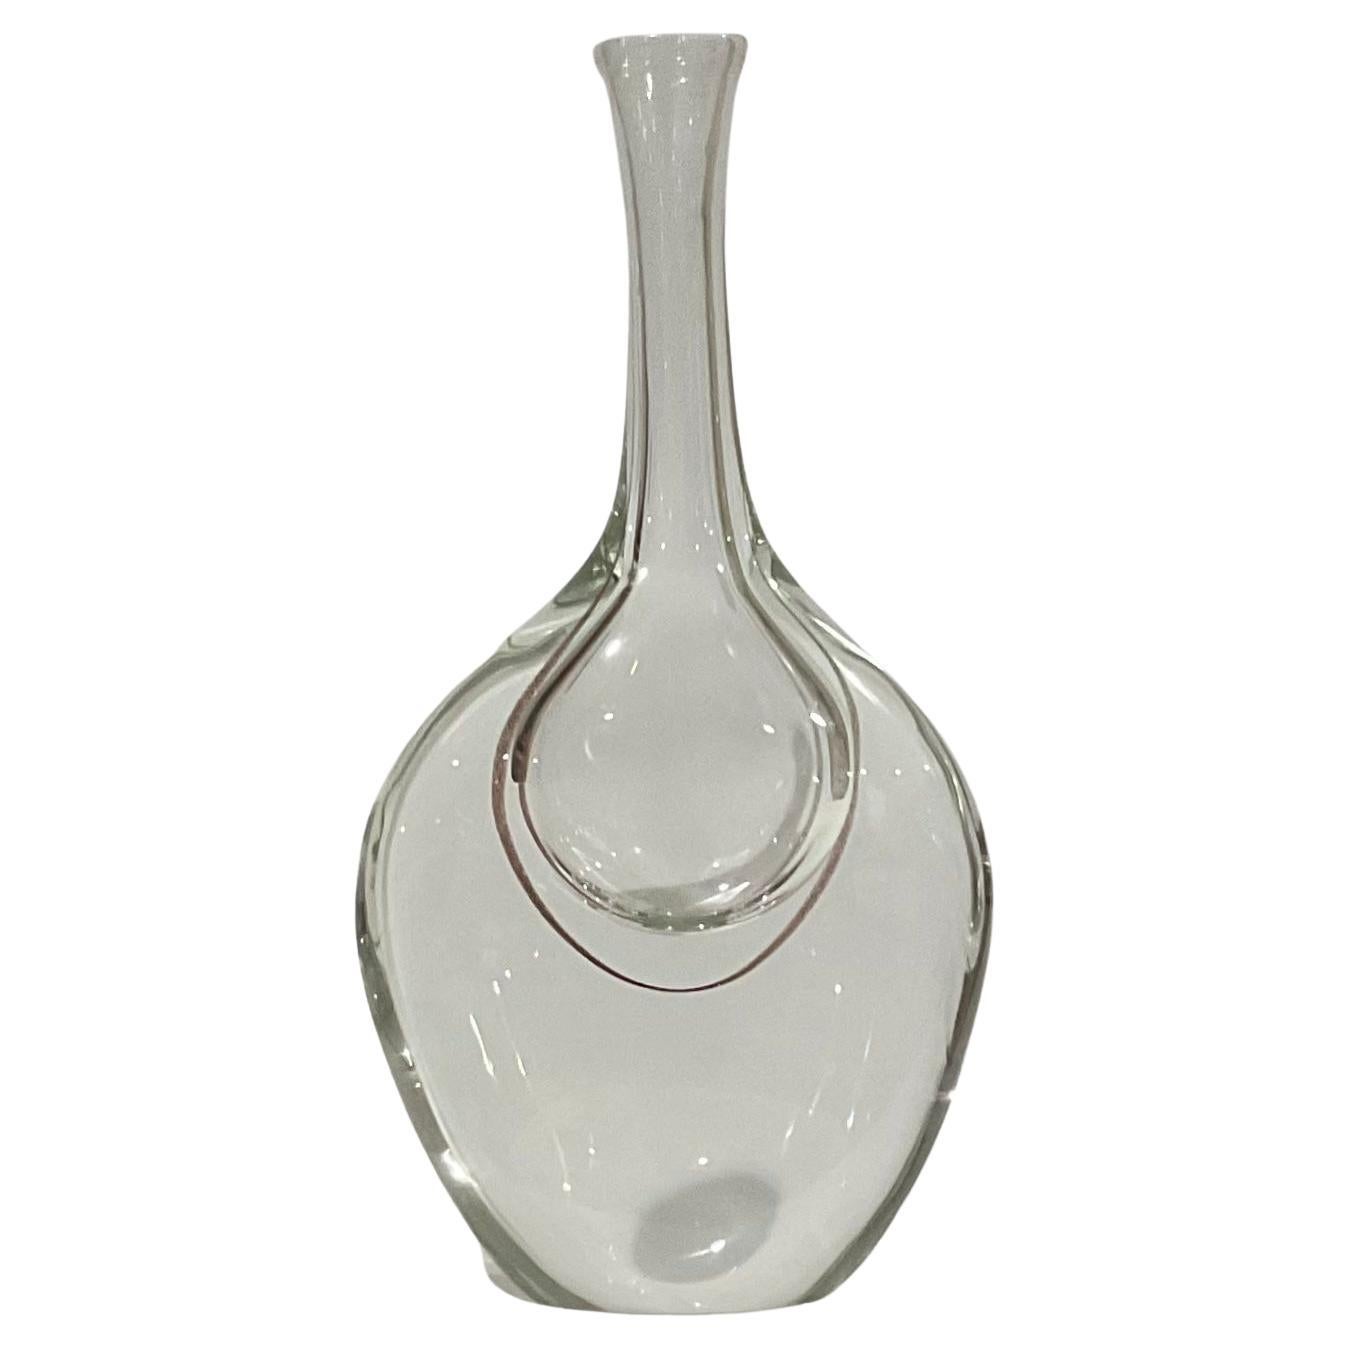 Rare Antonio da Ros Cenedese Sasso Murano Glass Vase with Internal Decoration